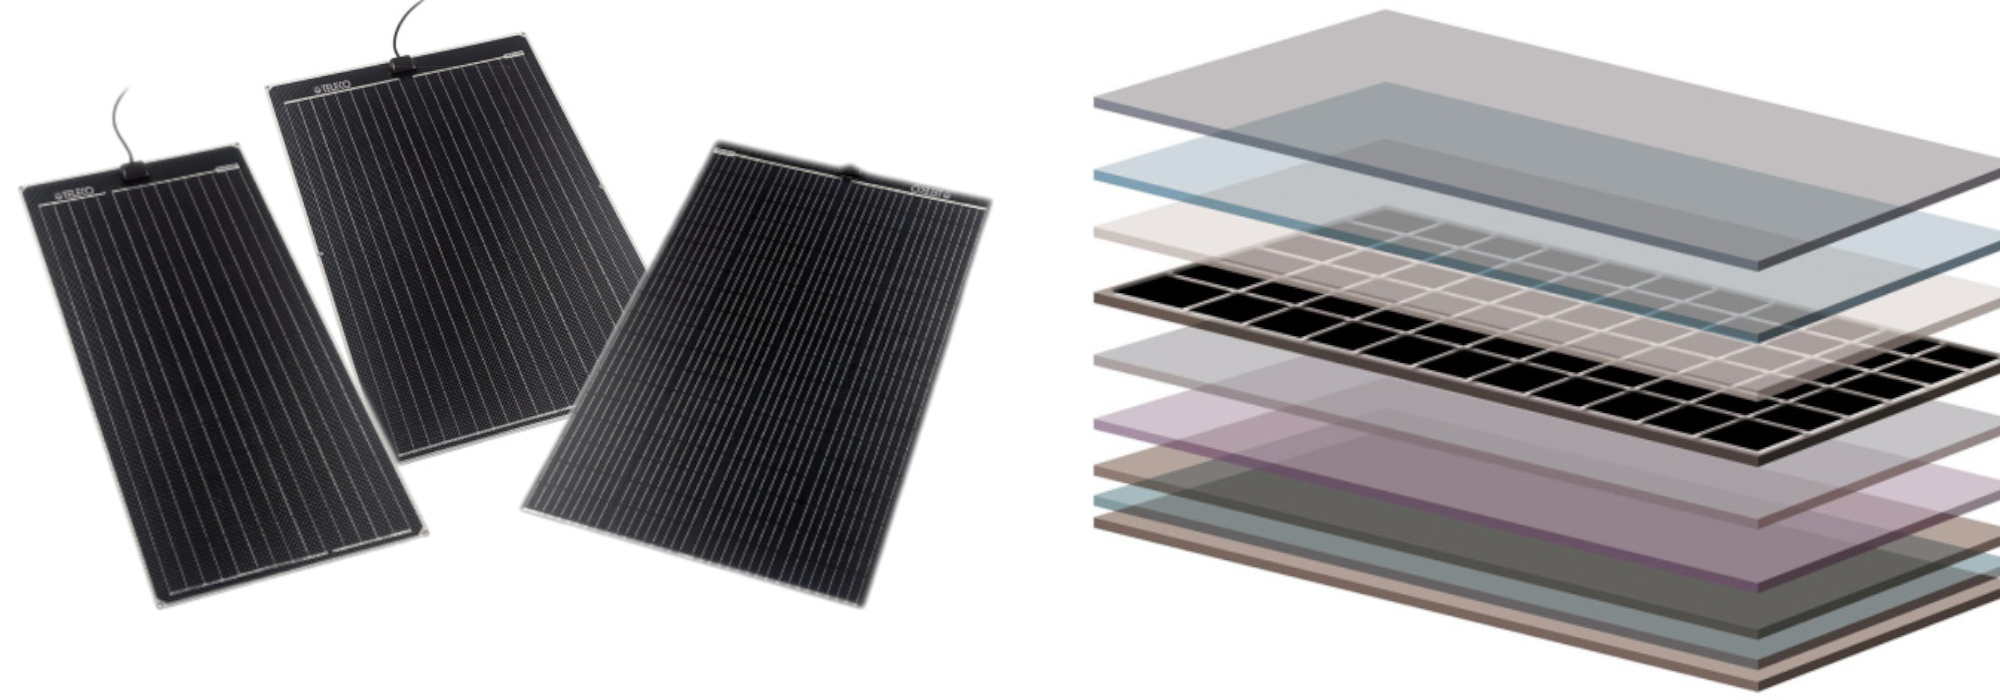 Pannelli solari flessibili Telair Black Coolflex: potenti, leggeri e resistenti